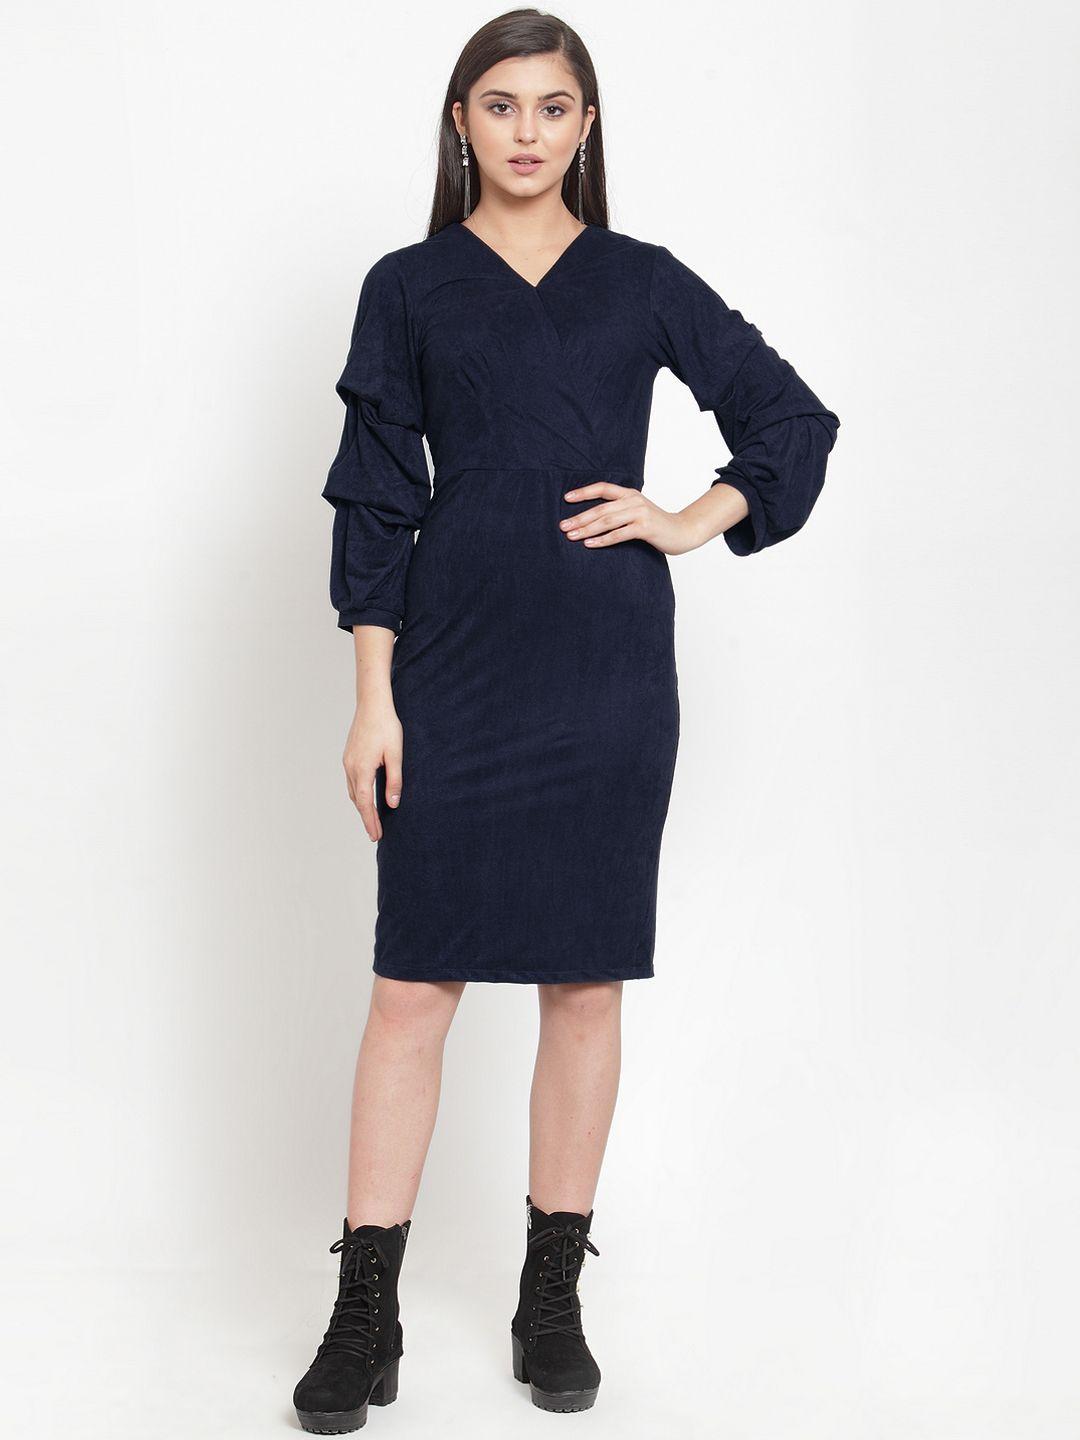 kassually women navy blue solid sheath dress